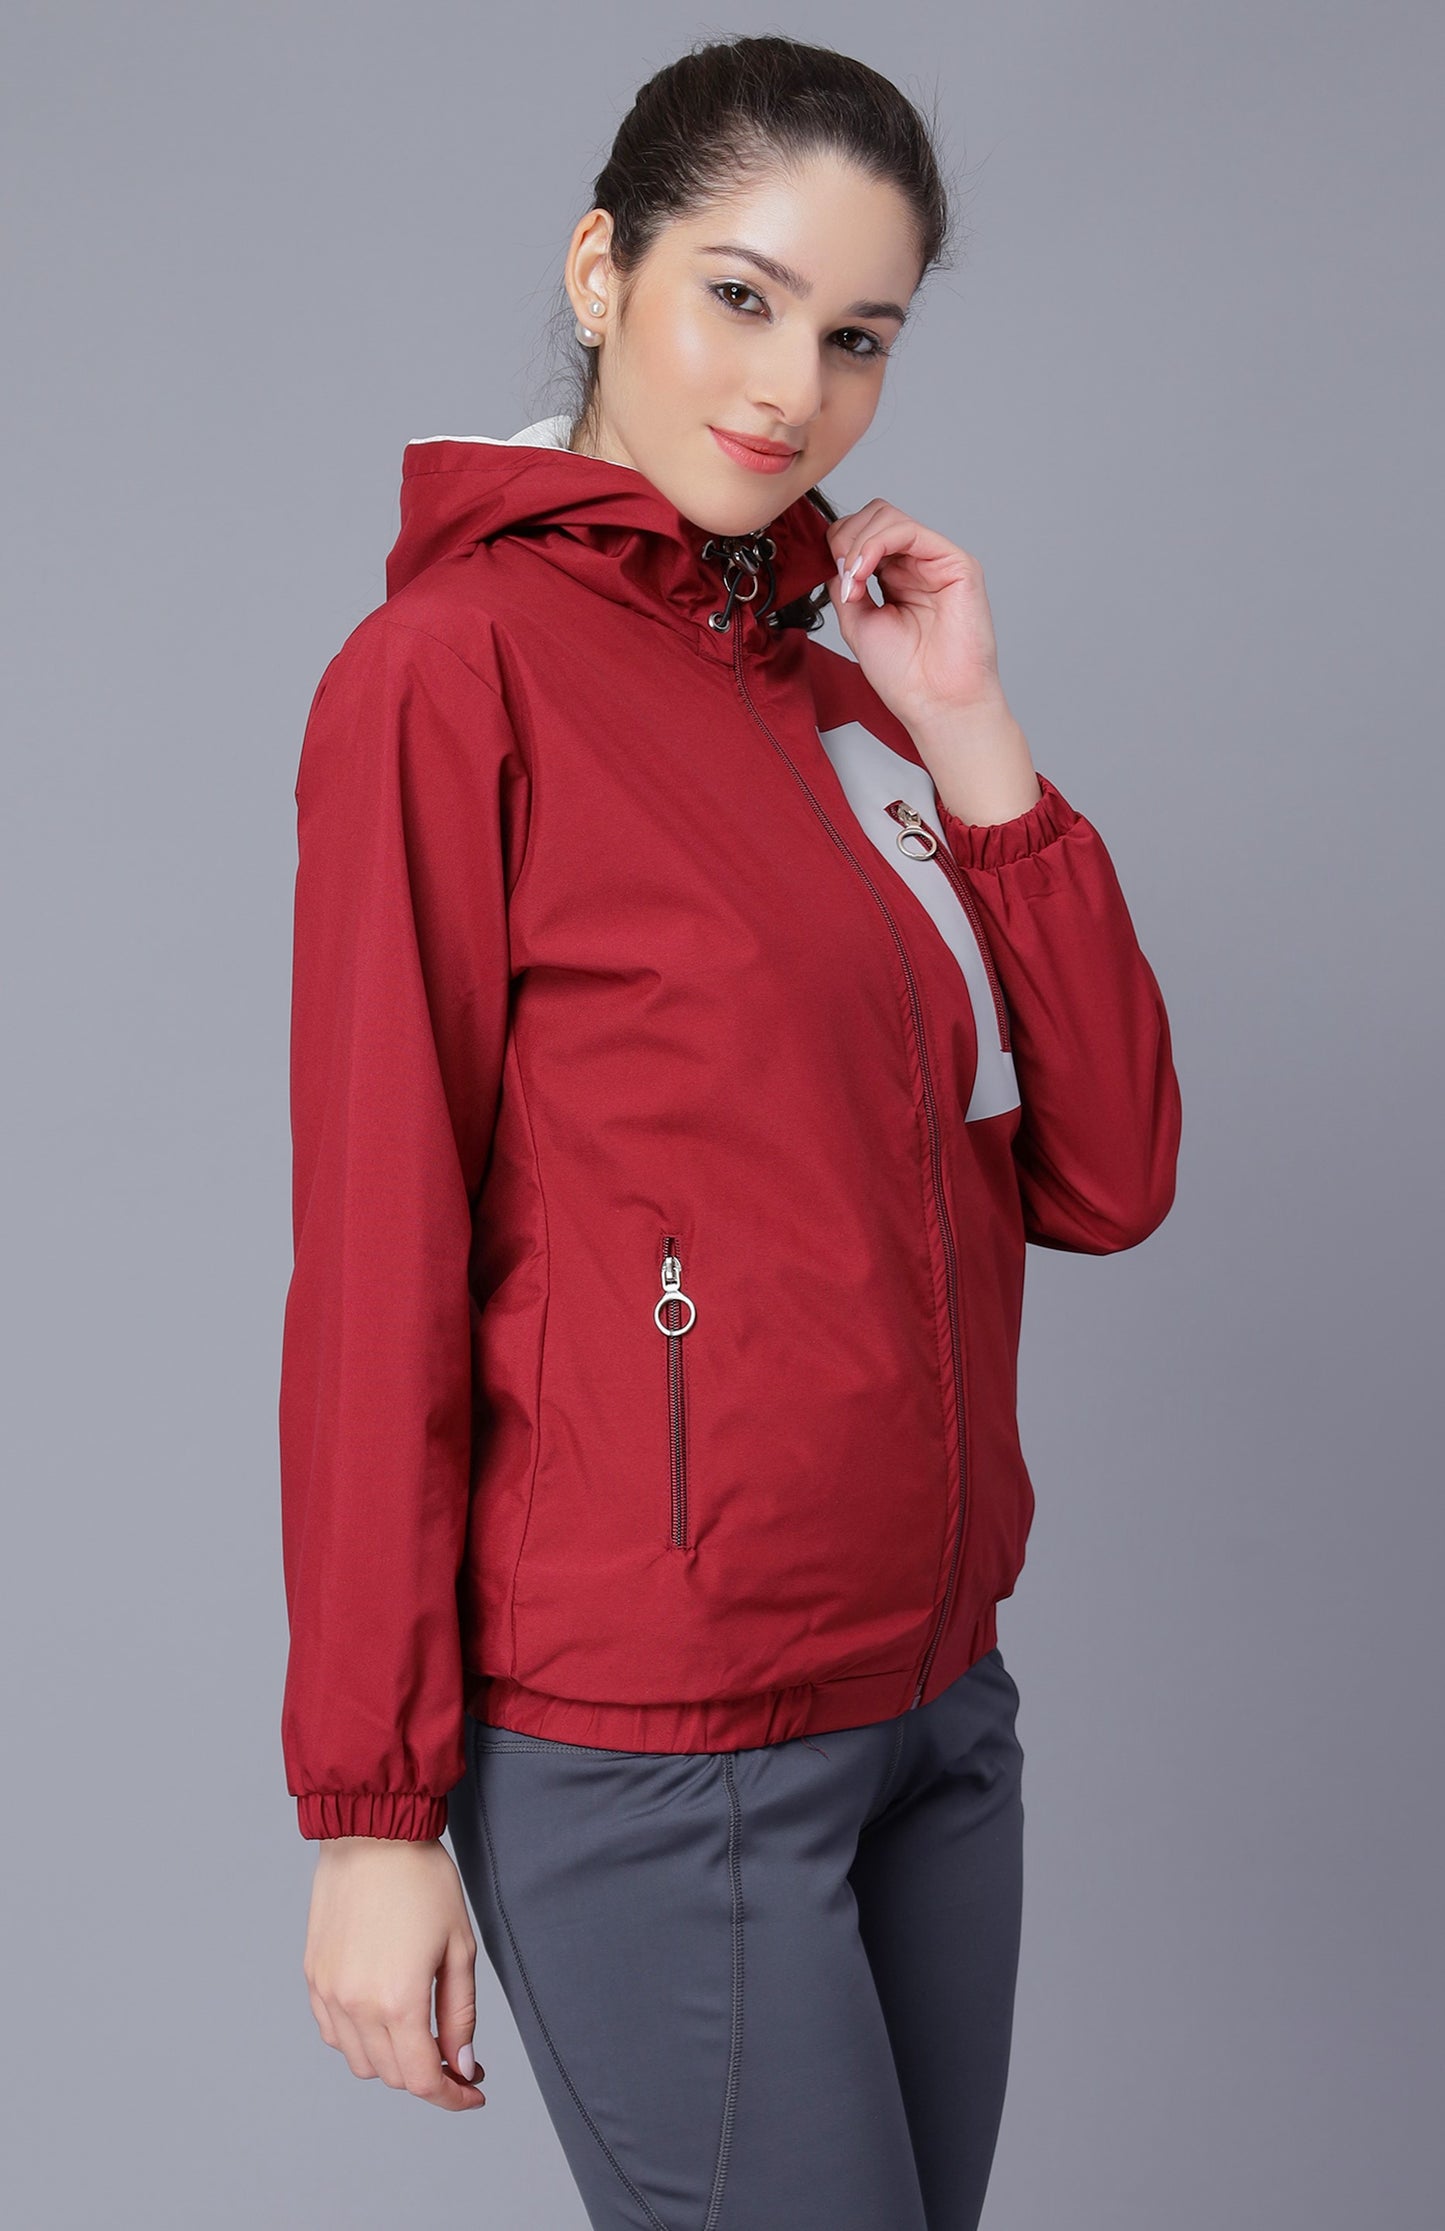 NUEVOSDAMAS Women Solid Red Hooded Bomber Jacket